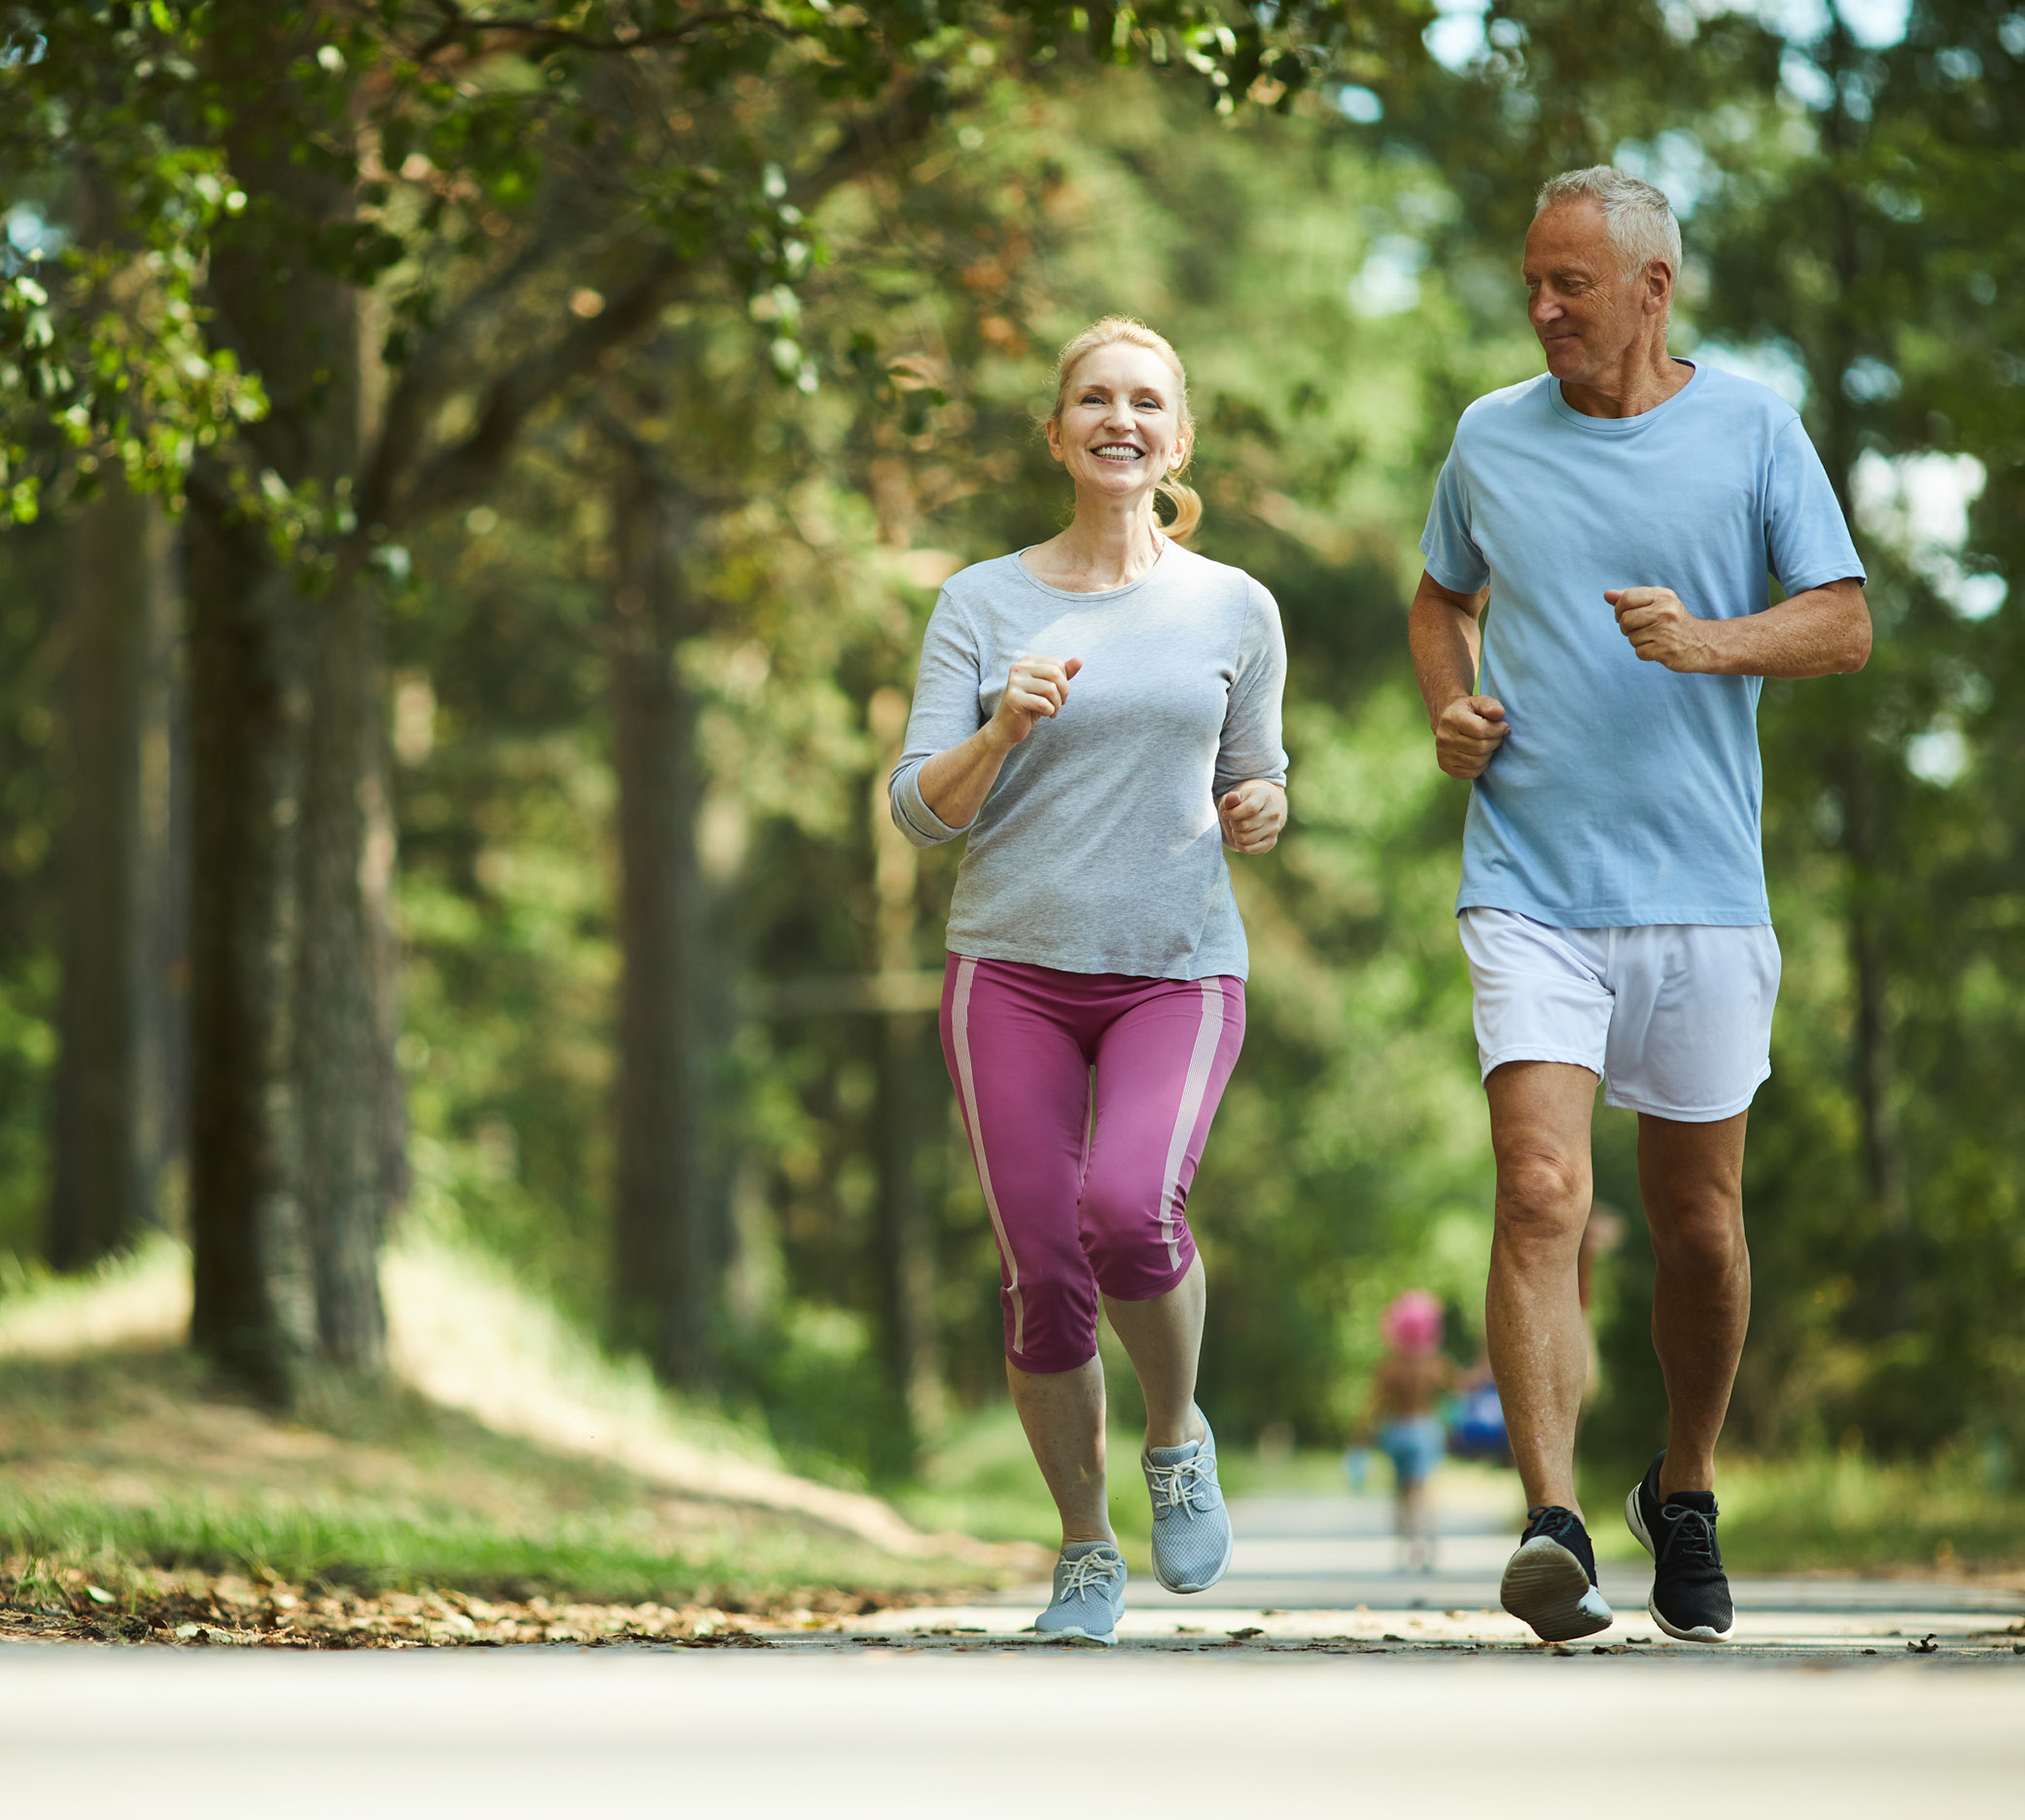 An Active elderly couple running